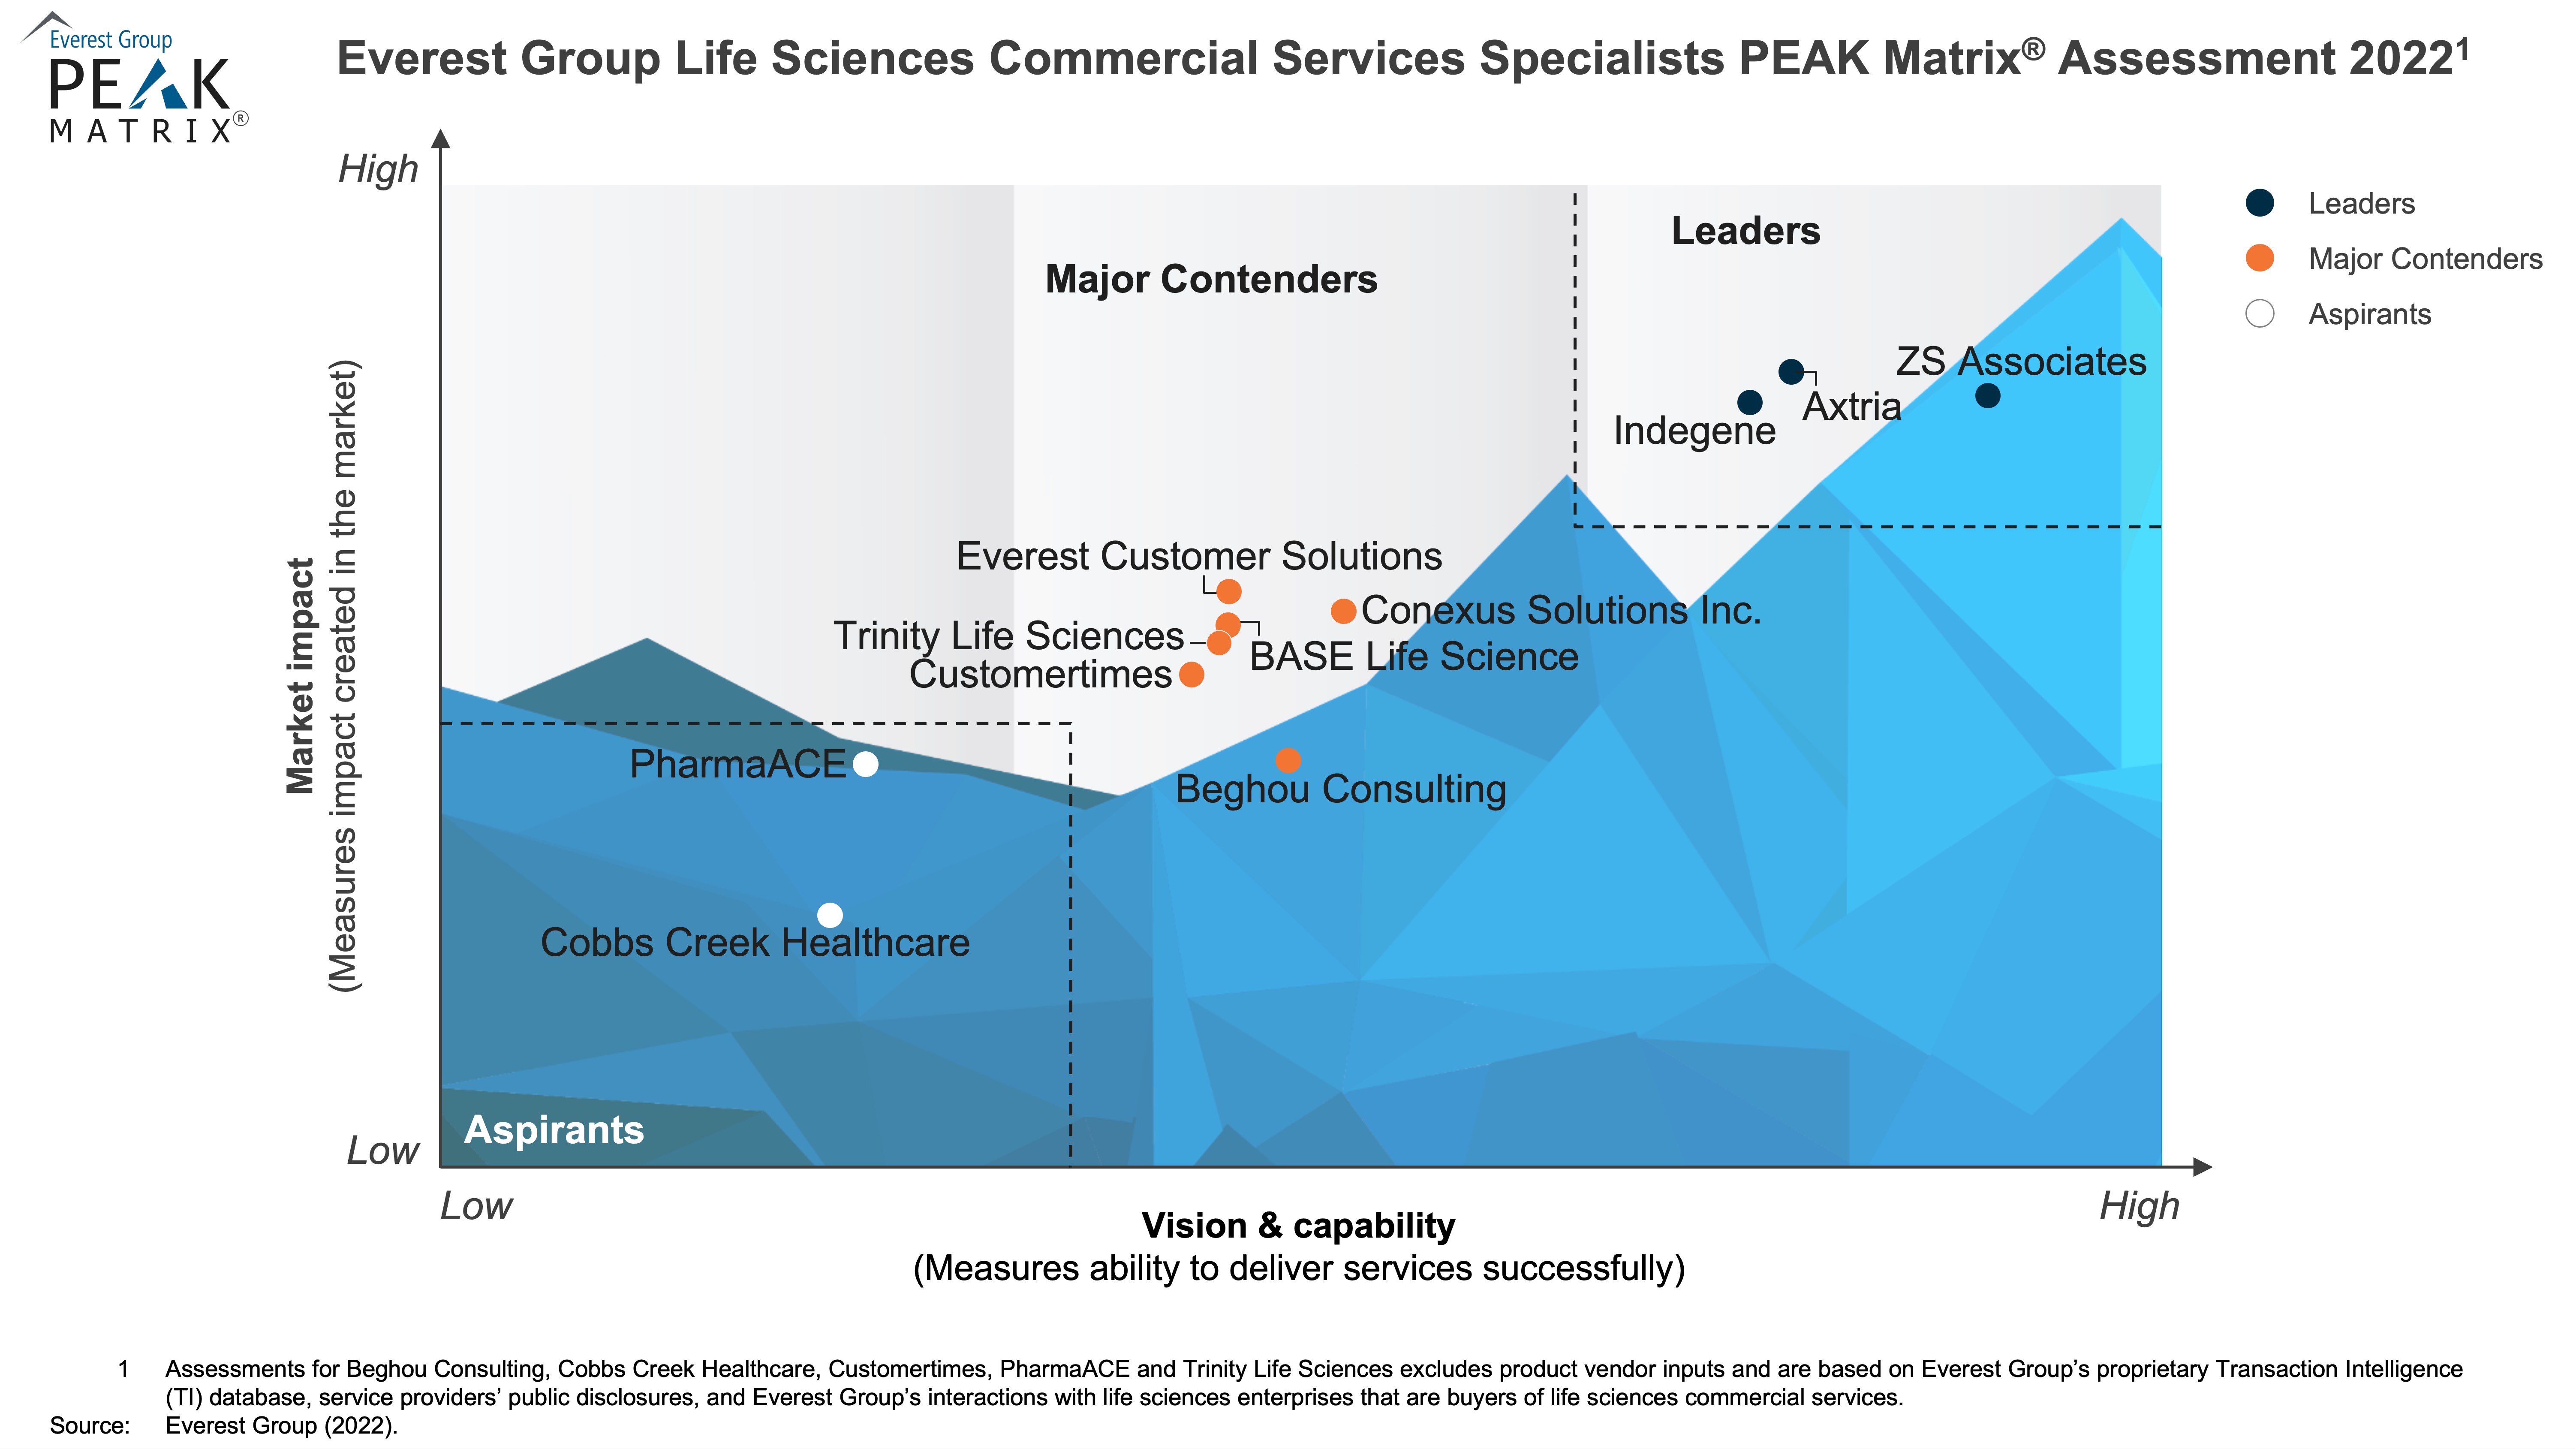 Everest Group Life Sciences Commercial Services Specialists PEAK Matrix® Assessment 2022: Everest Group Life Sciences Commercial Services Specialists PEAK Matrix® Assessment 2022